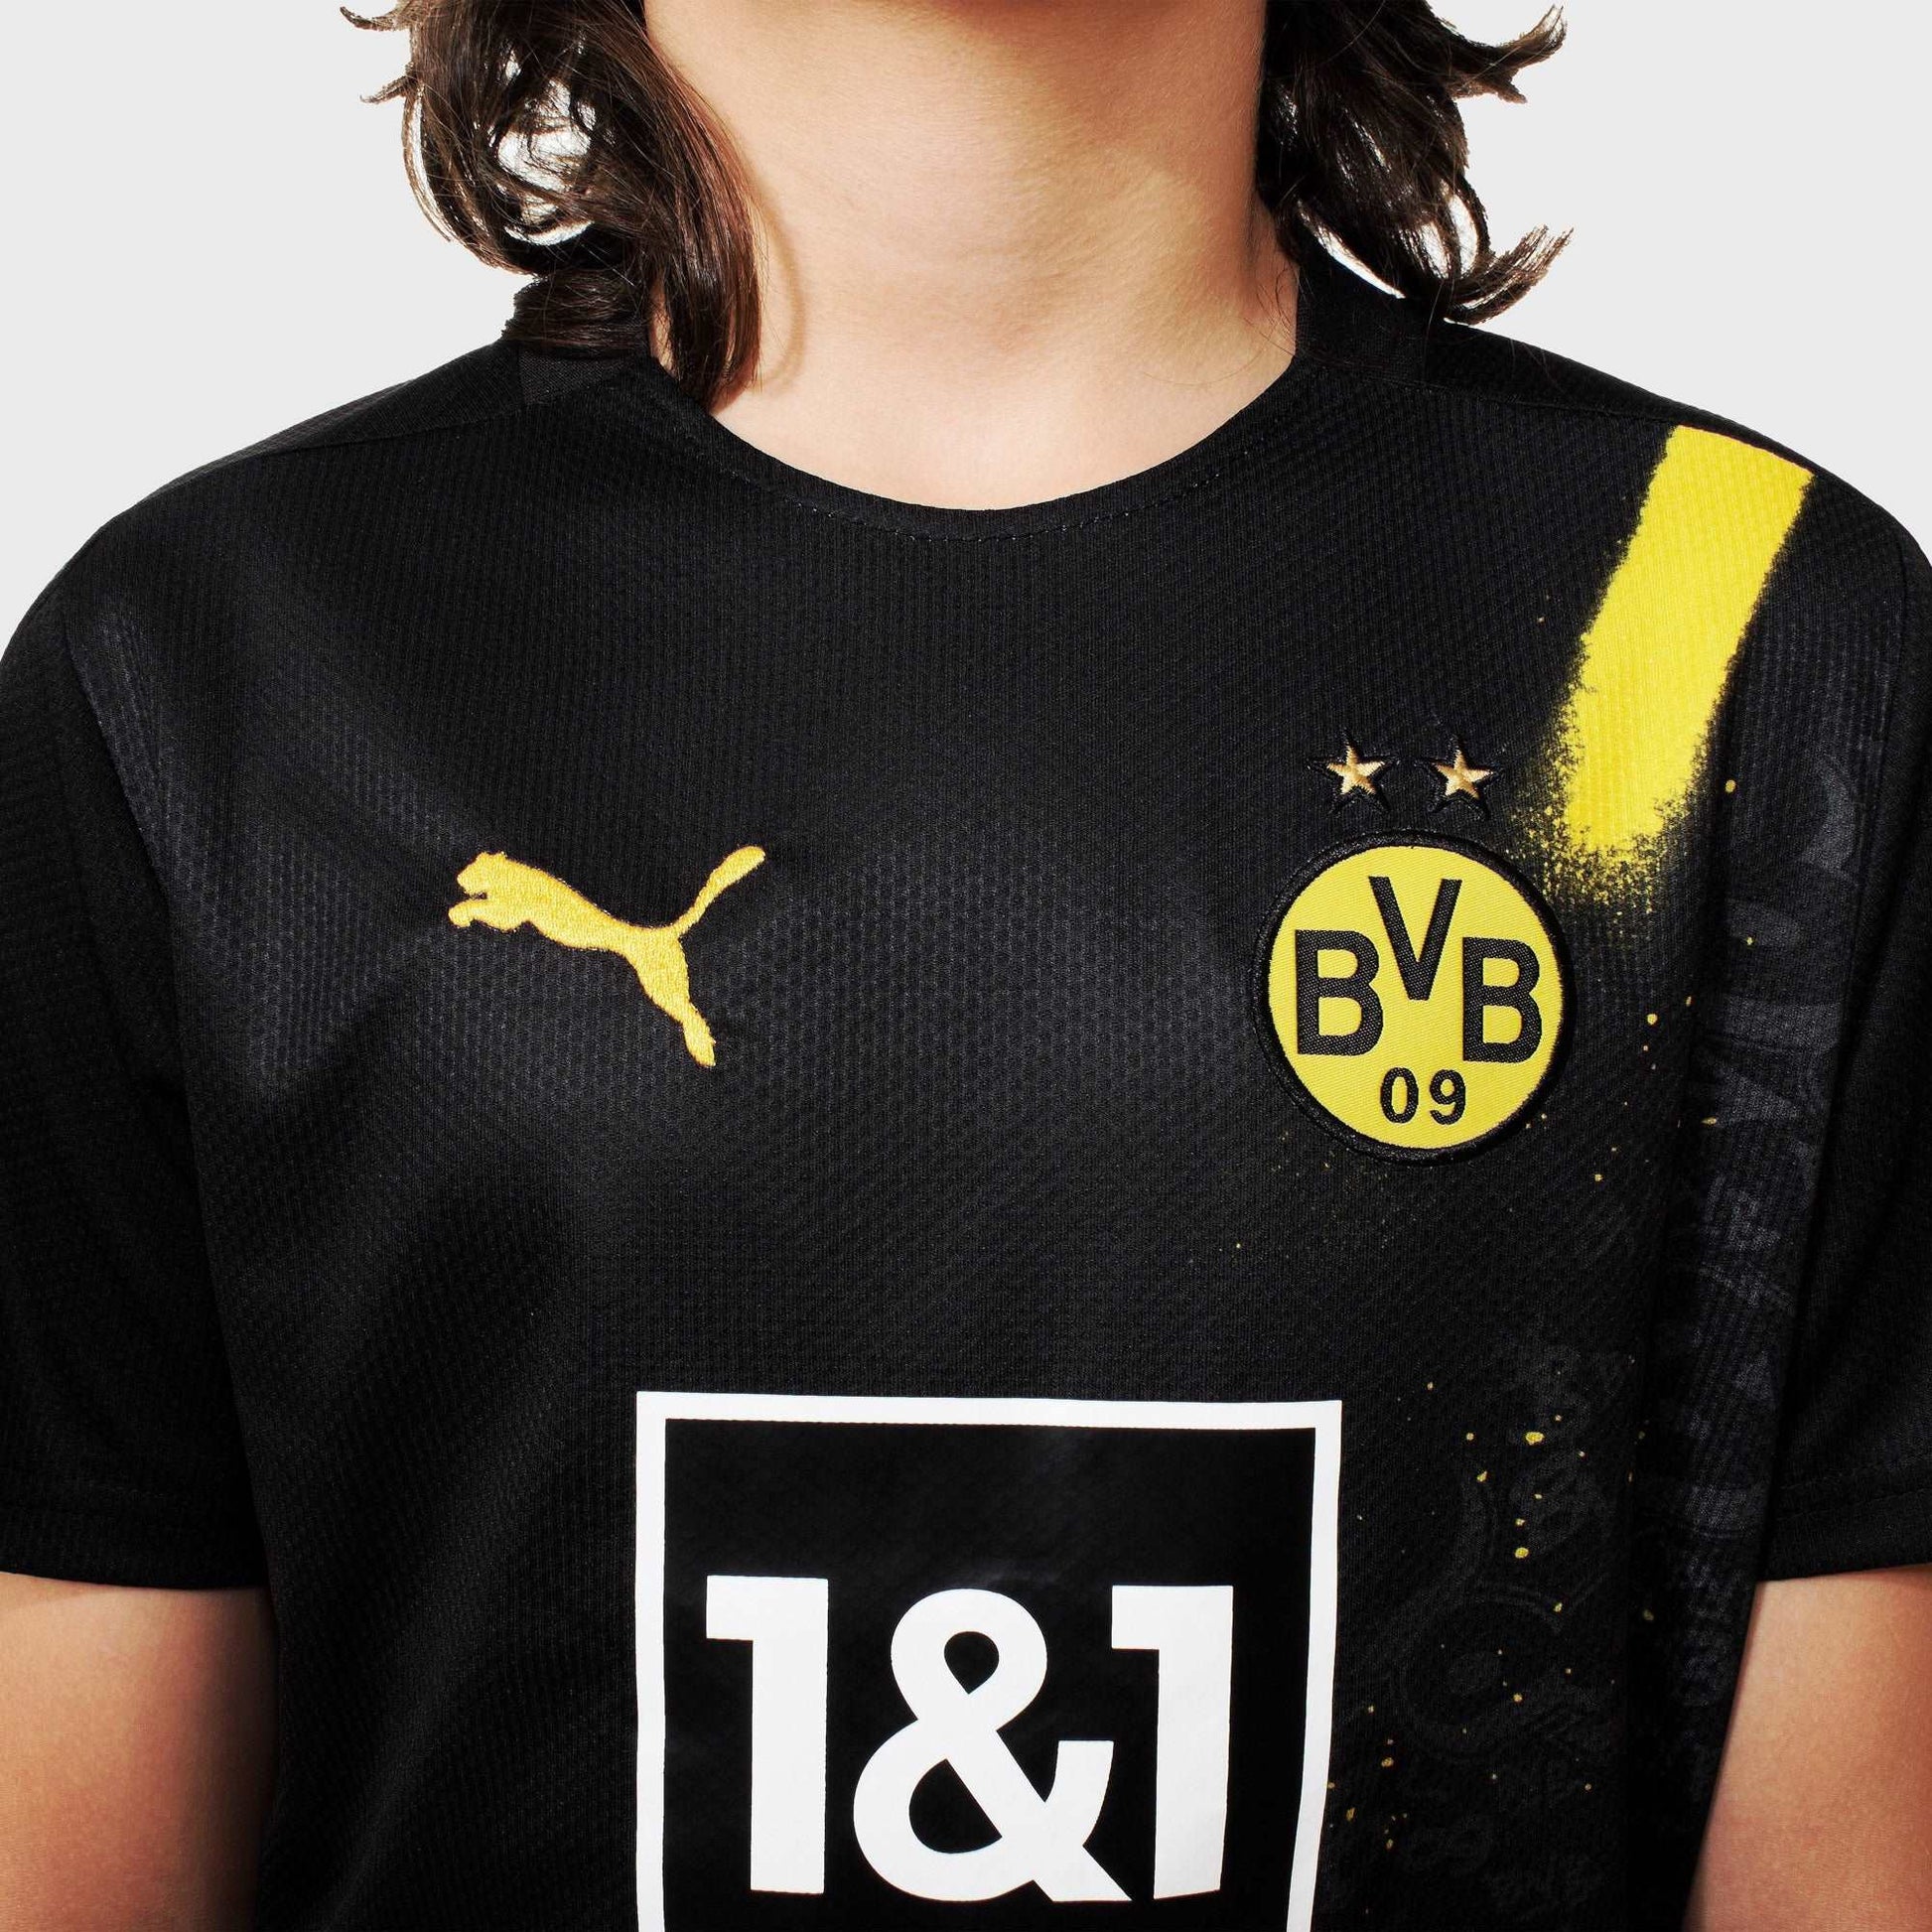 Borussia Dortmund 20/21 Kids Away Kit